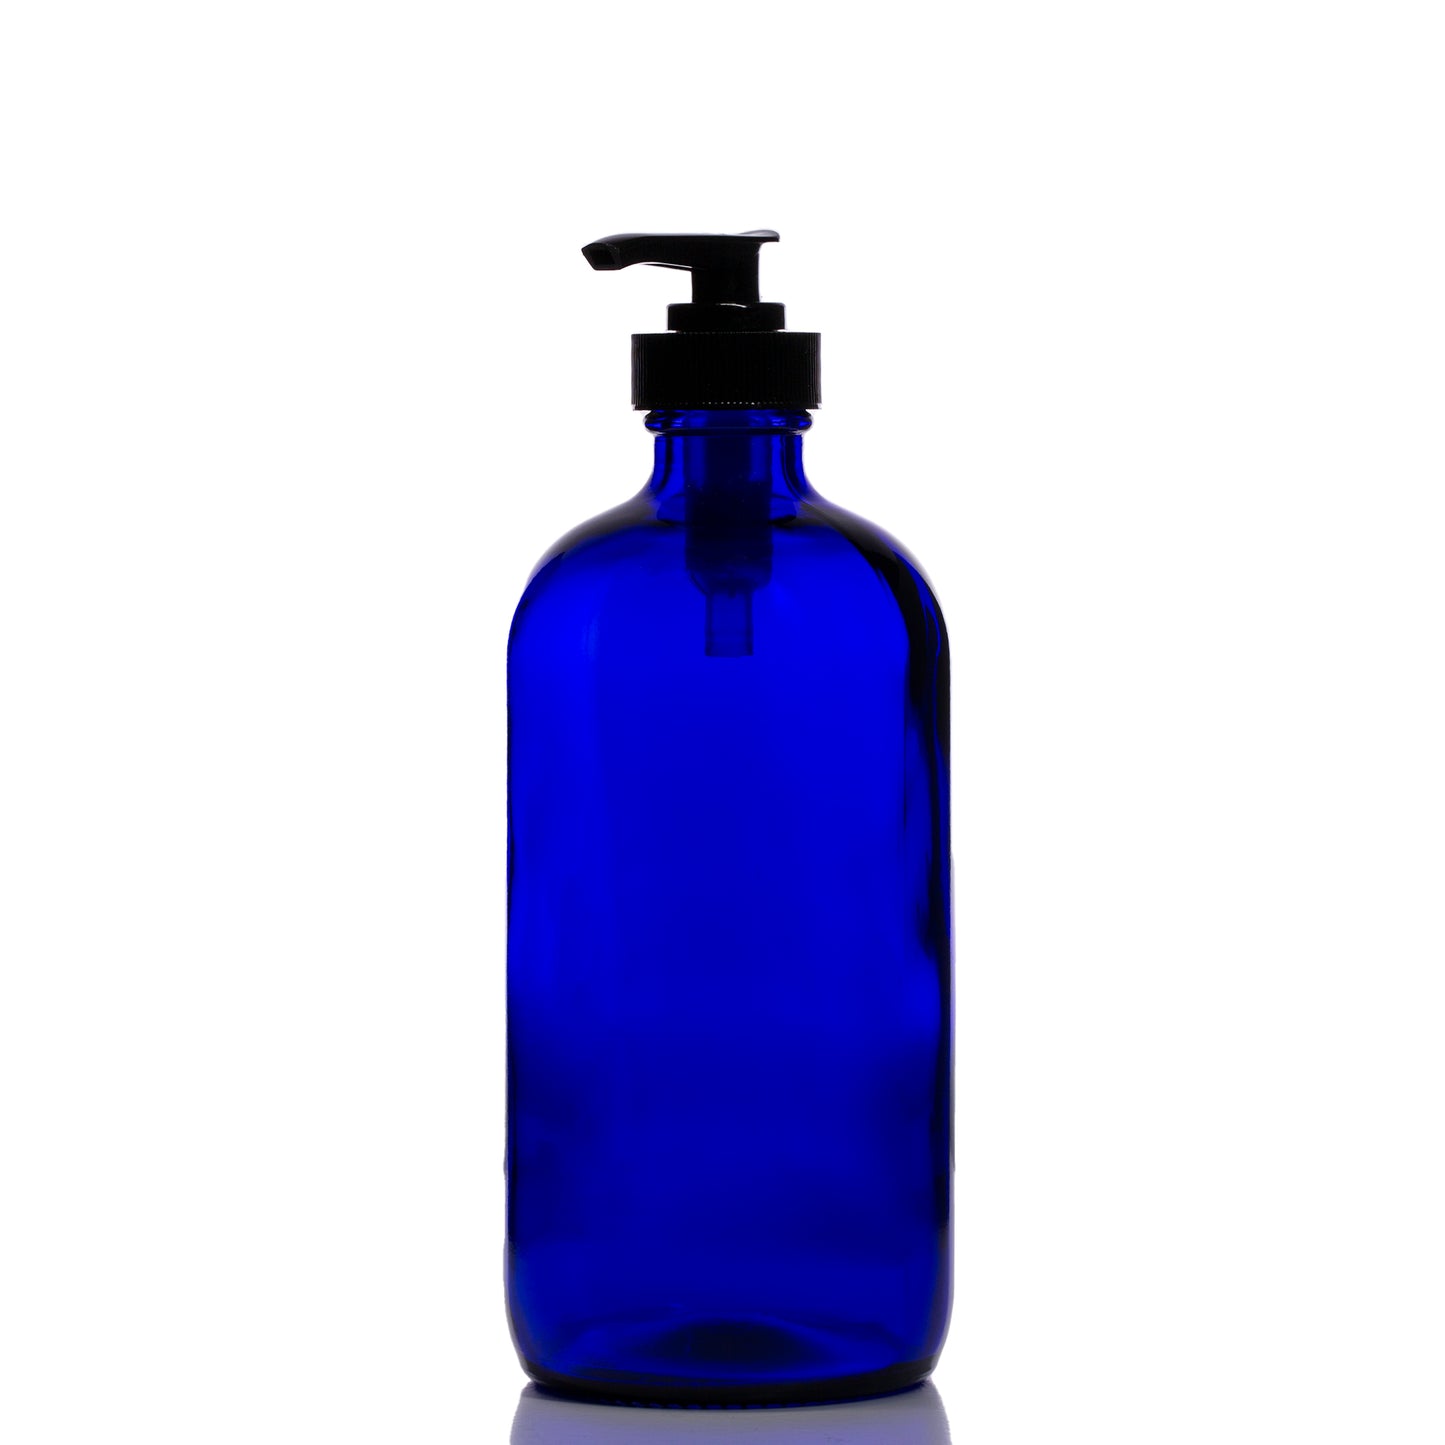 16oz Blue Glass Bottle with Black Pump